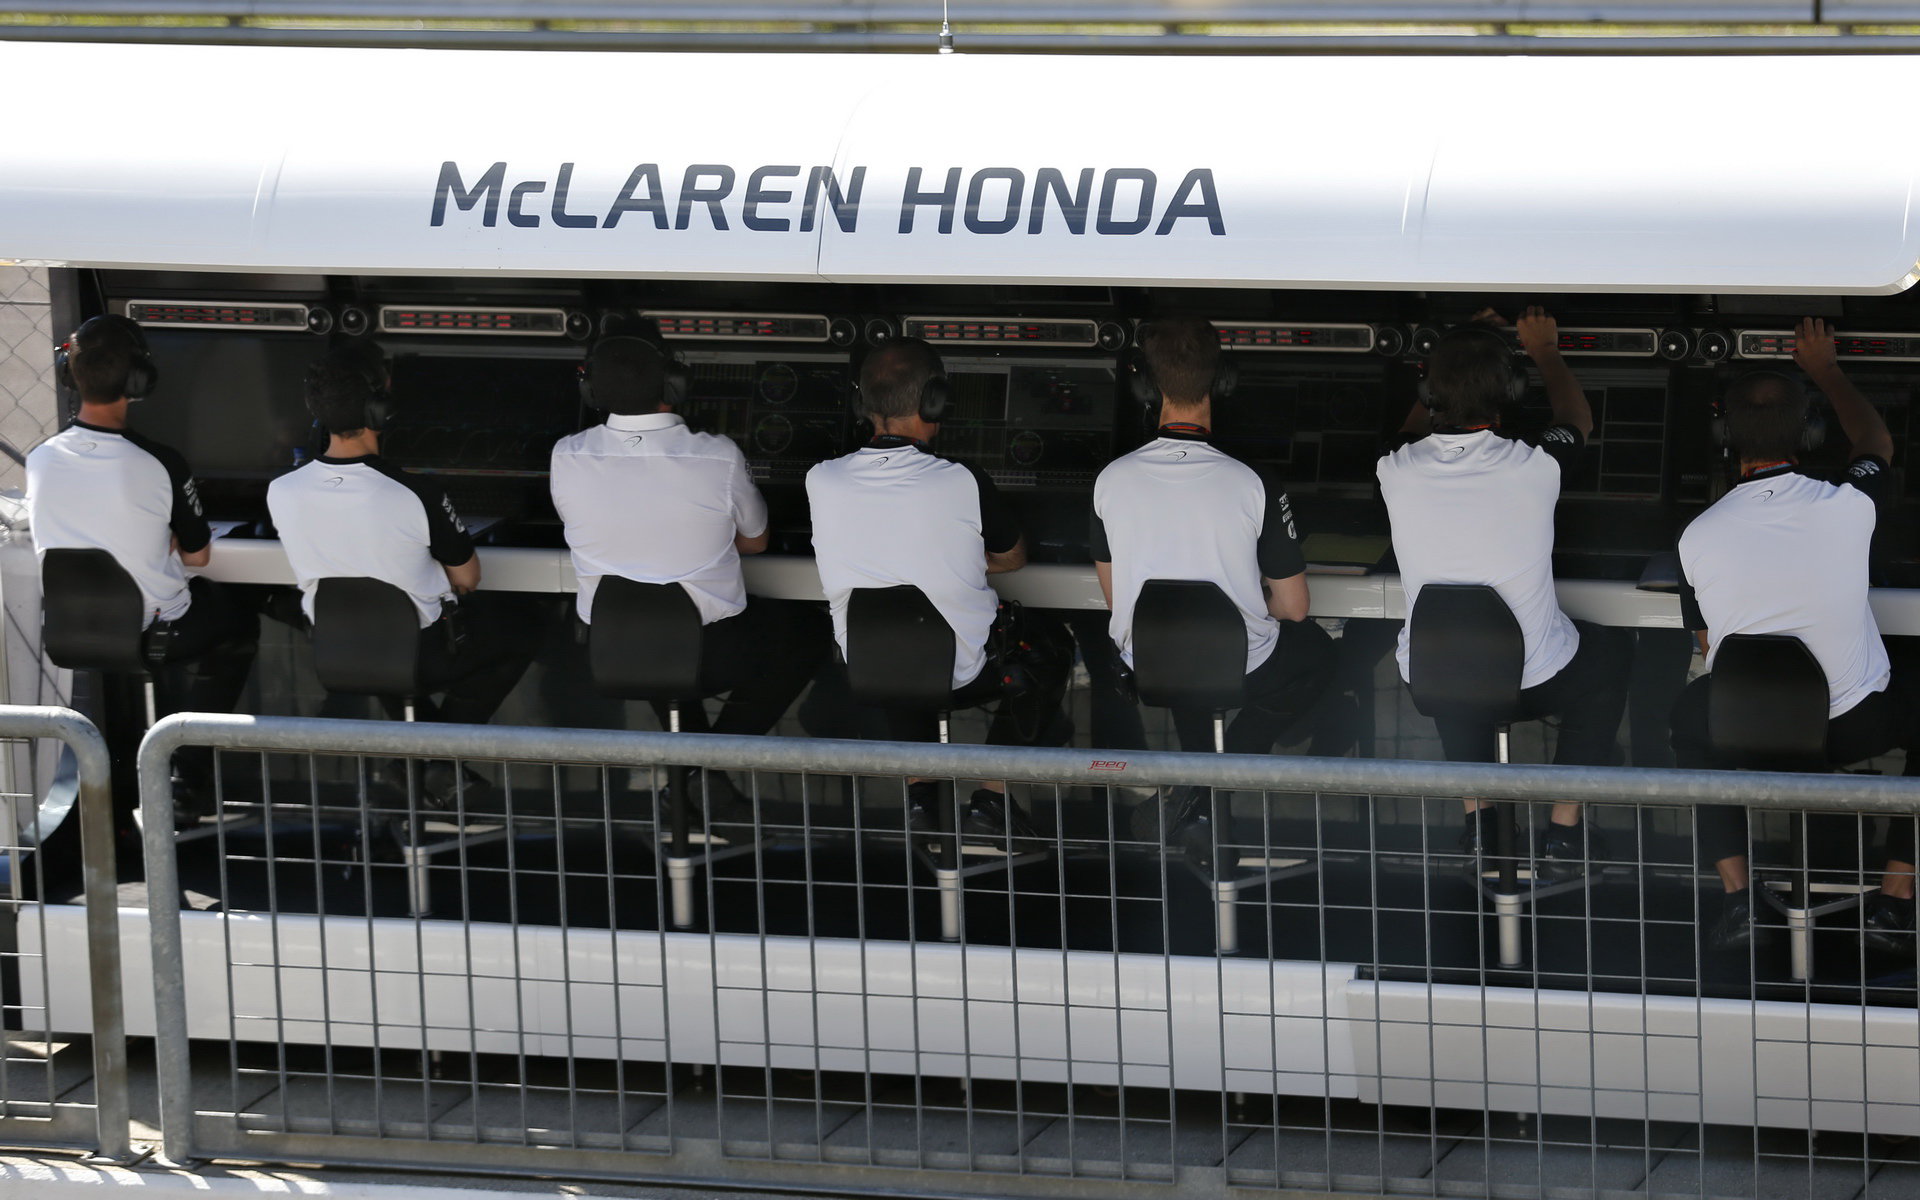 Pitwall týmu McLaren Honda, GP Itálie (Monza)